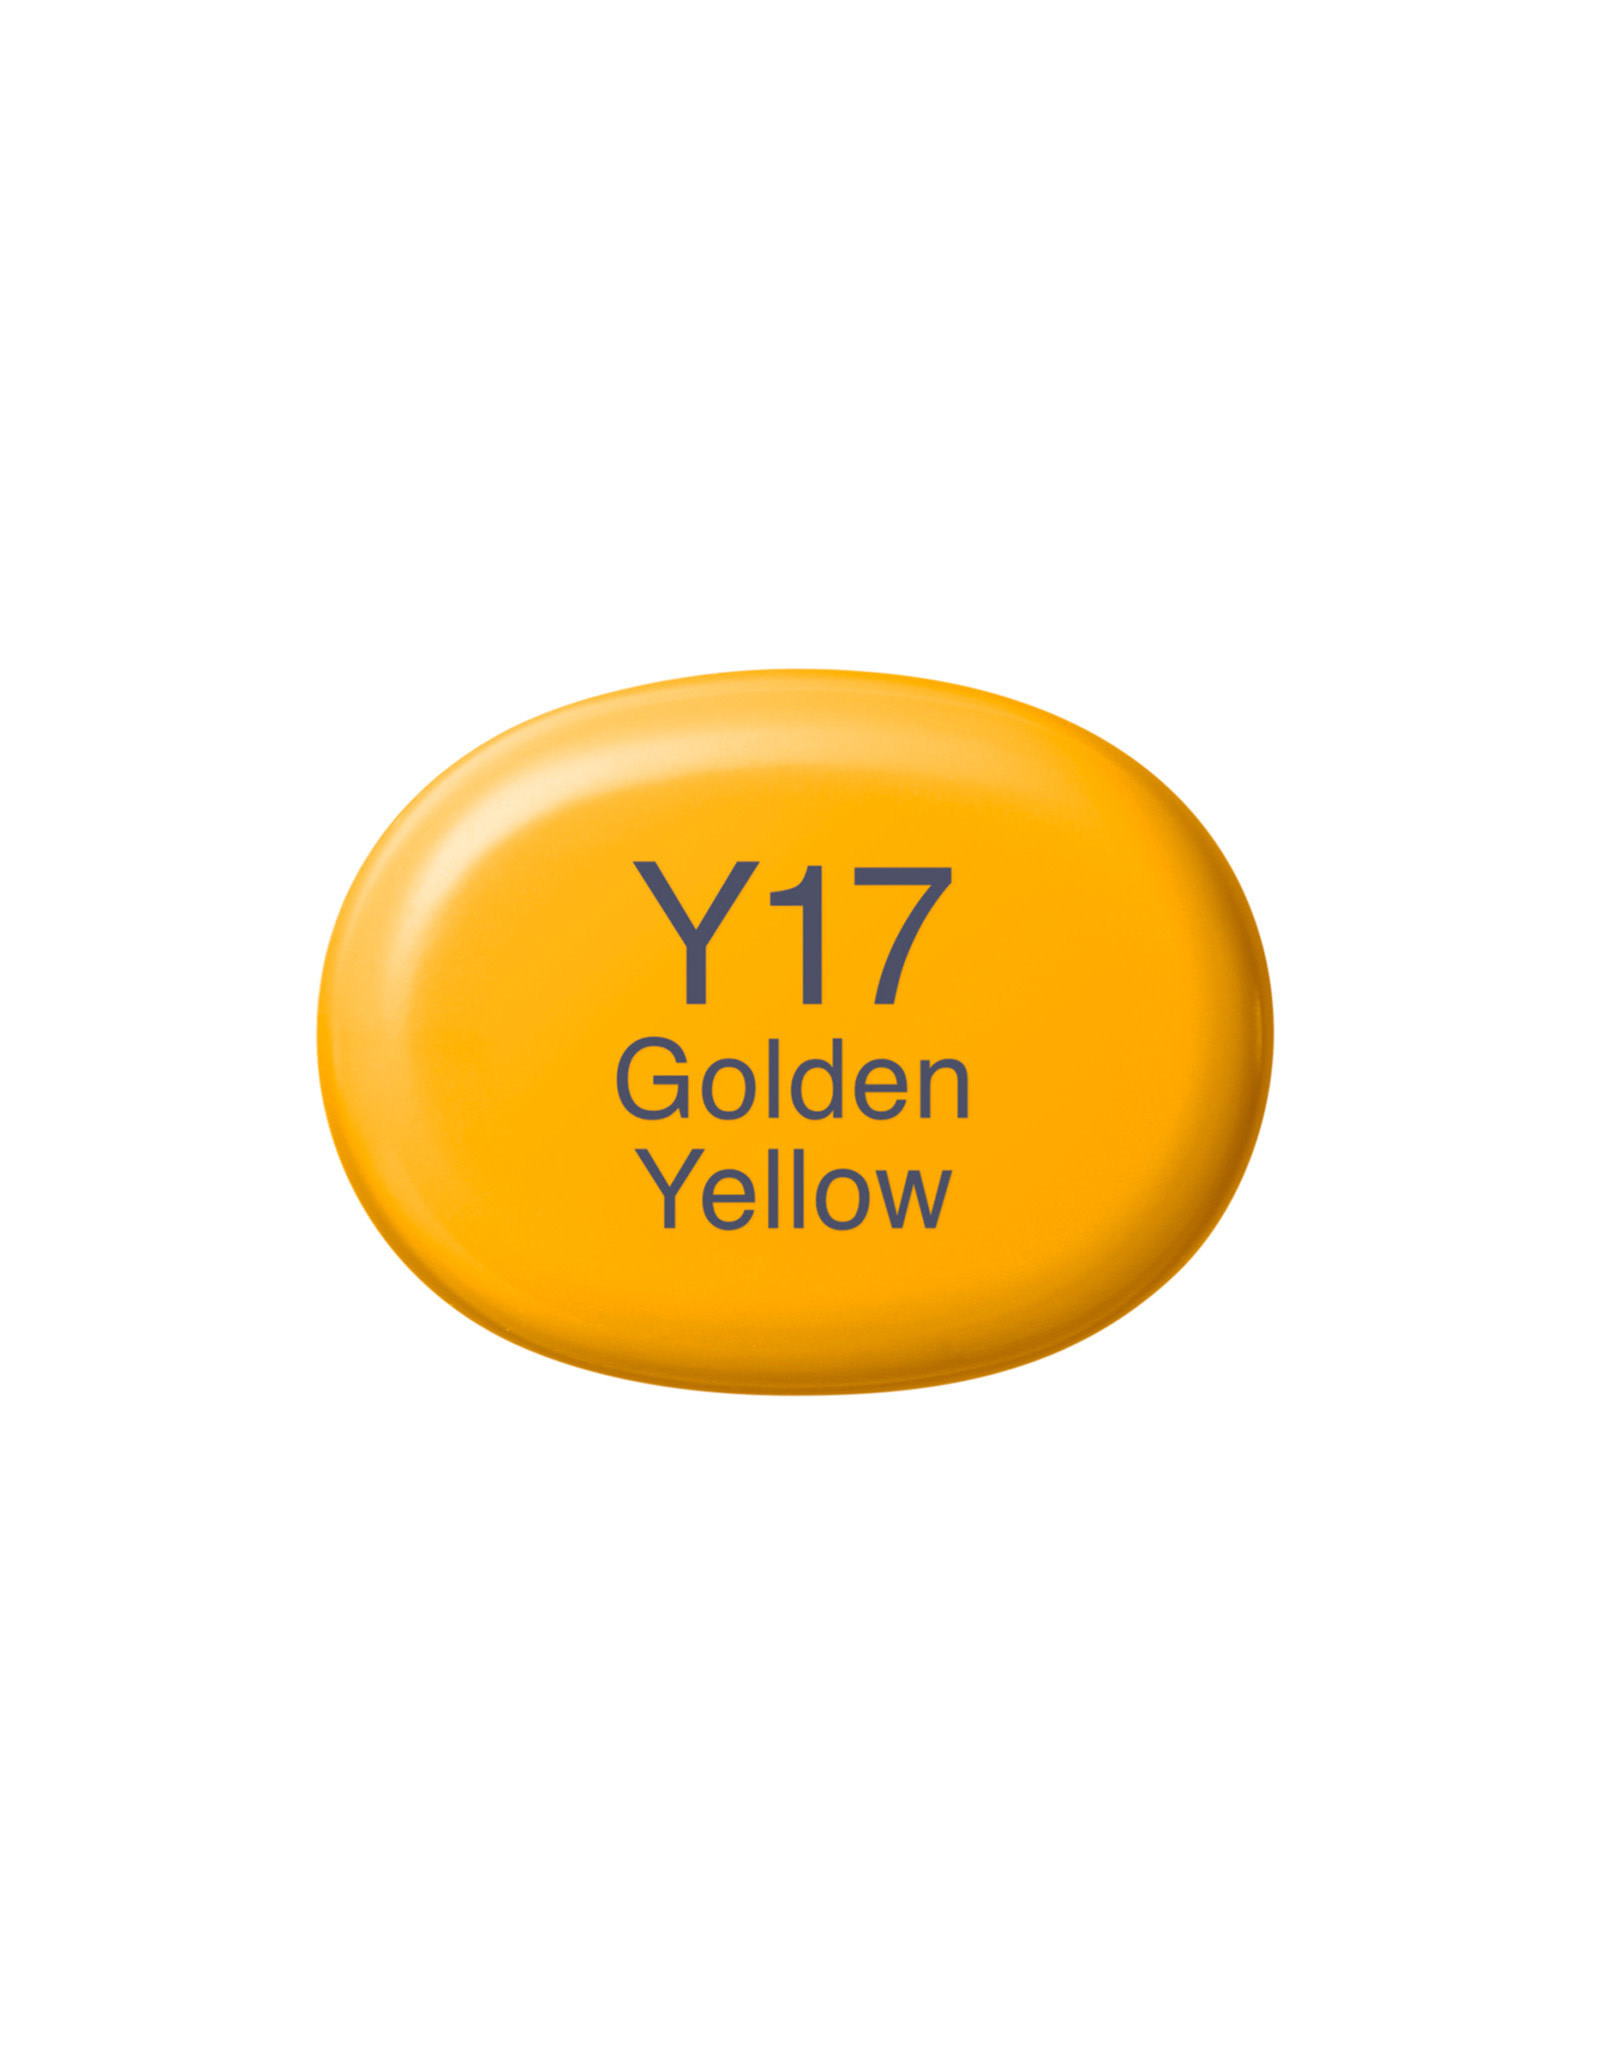 COPIC COPIC Sketch Marker Y17 Golden Yellow